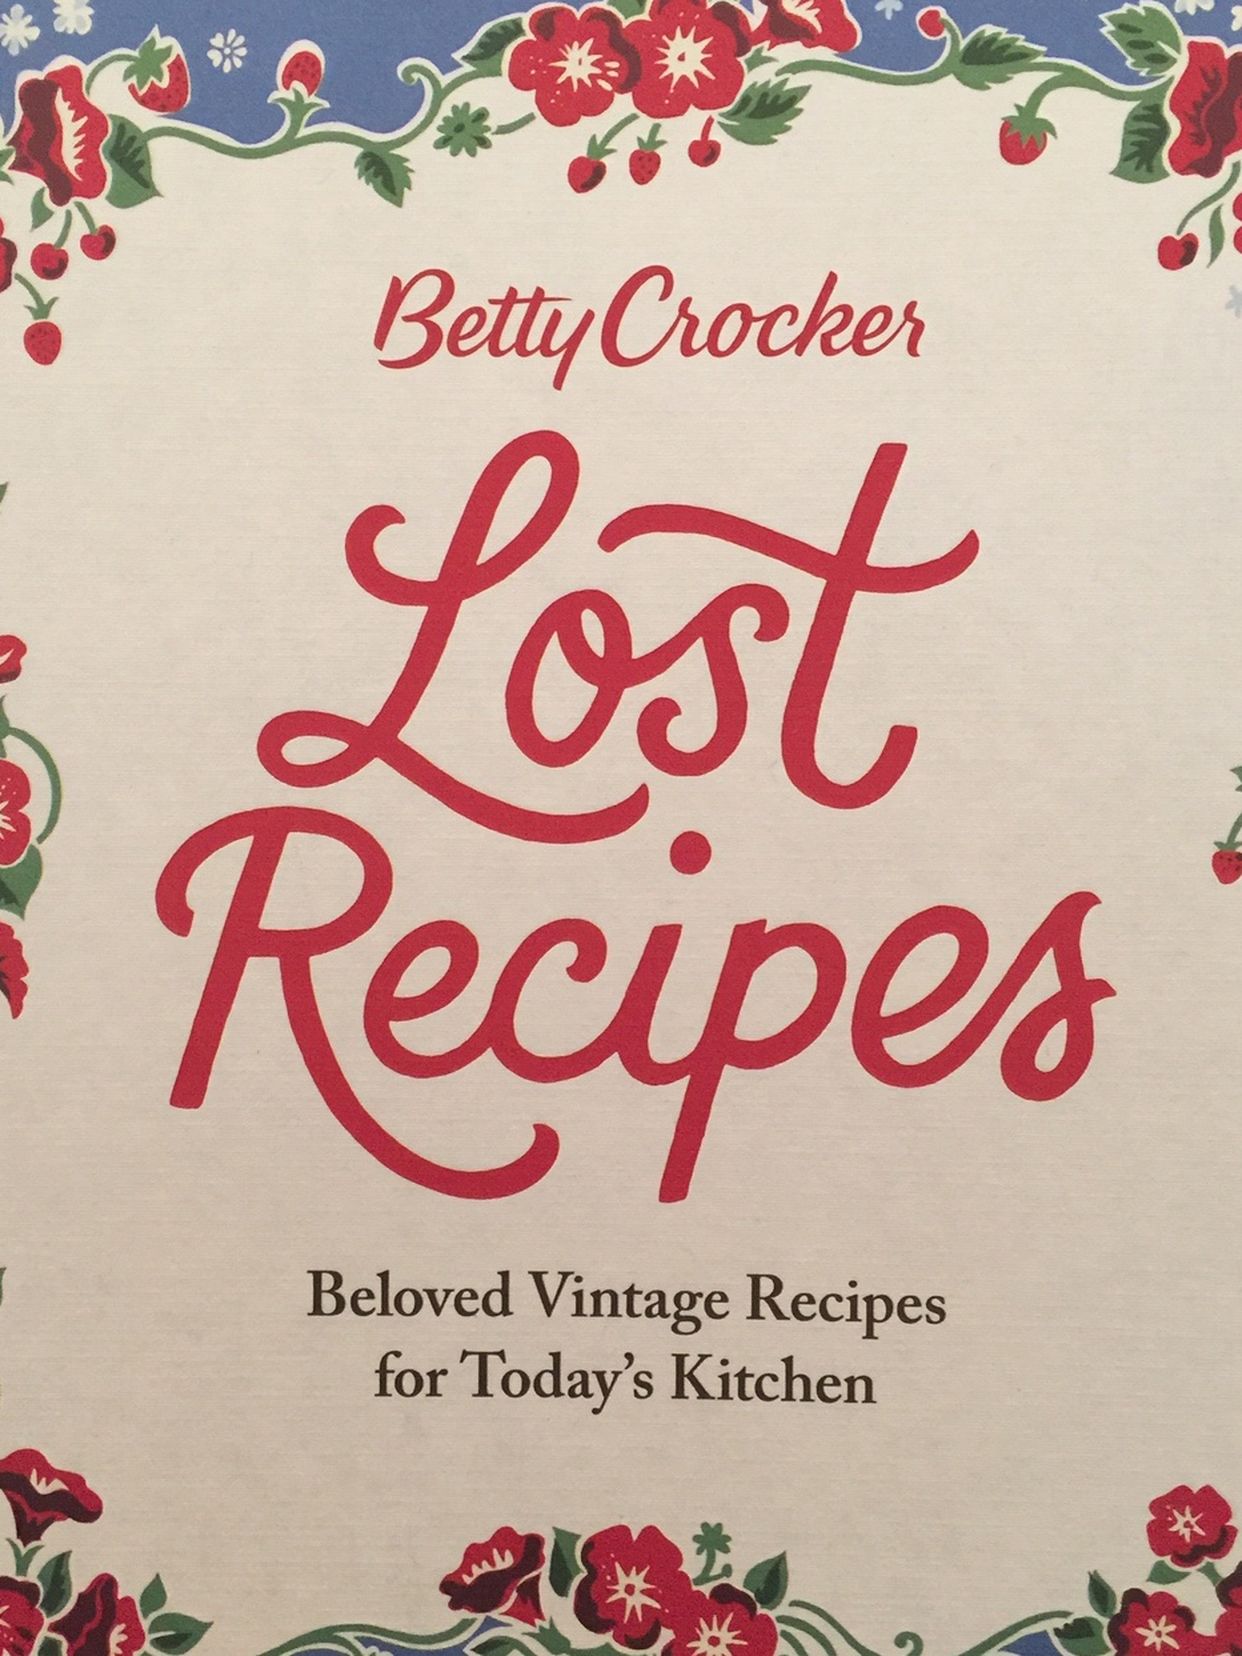 Cook Book Betty Crocker “Lost Recipes”